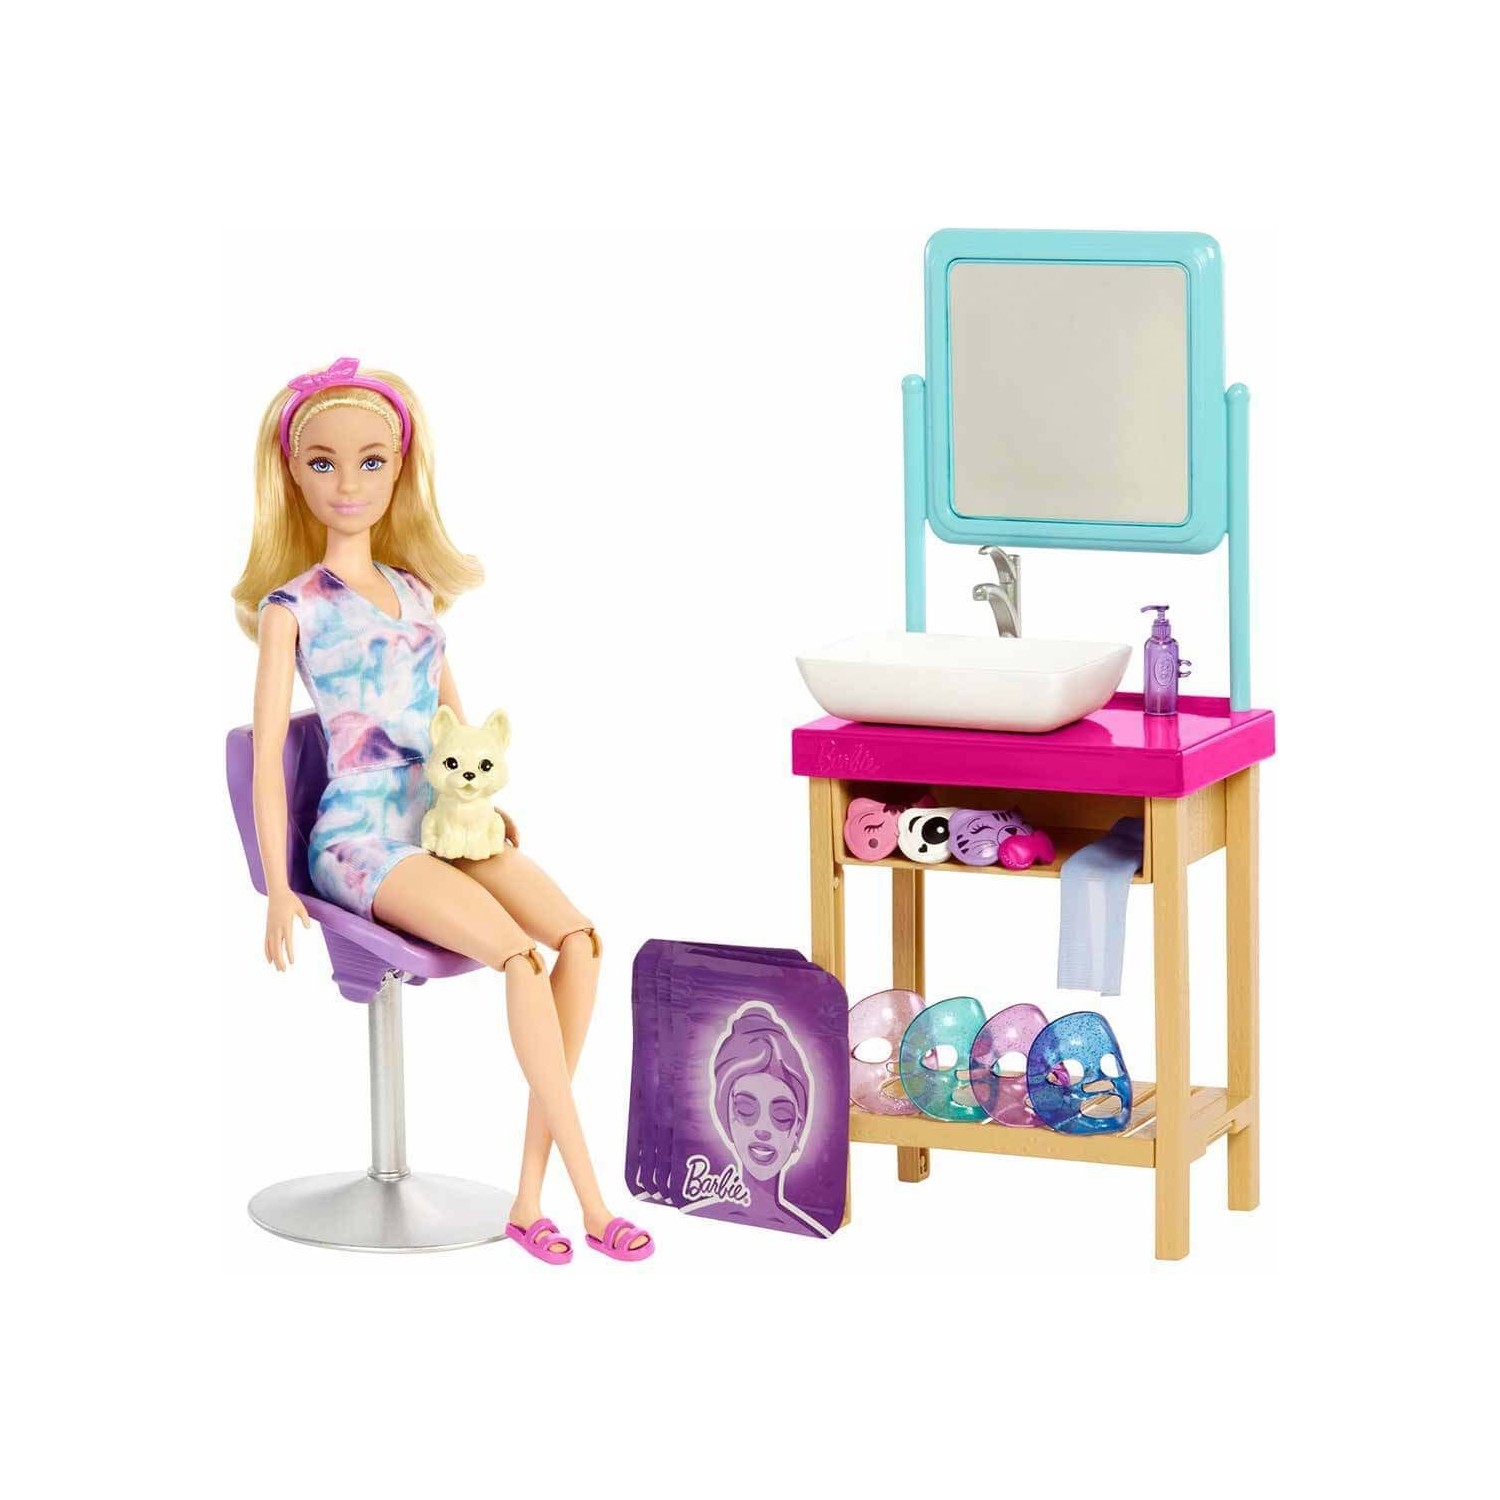 Игровой набор Barbie Sparkle Spa Day HCM82 игровой набор barbie кондитерская hgb73 розовый